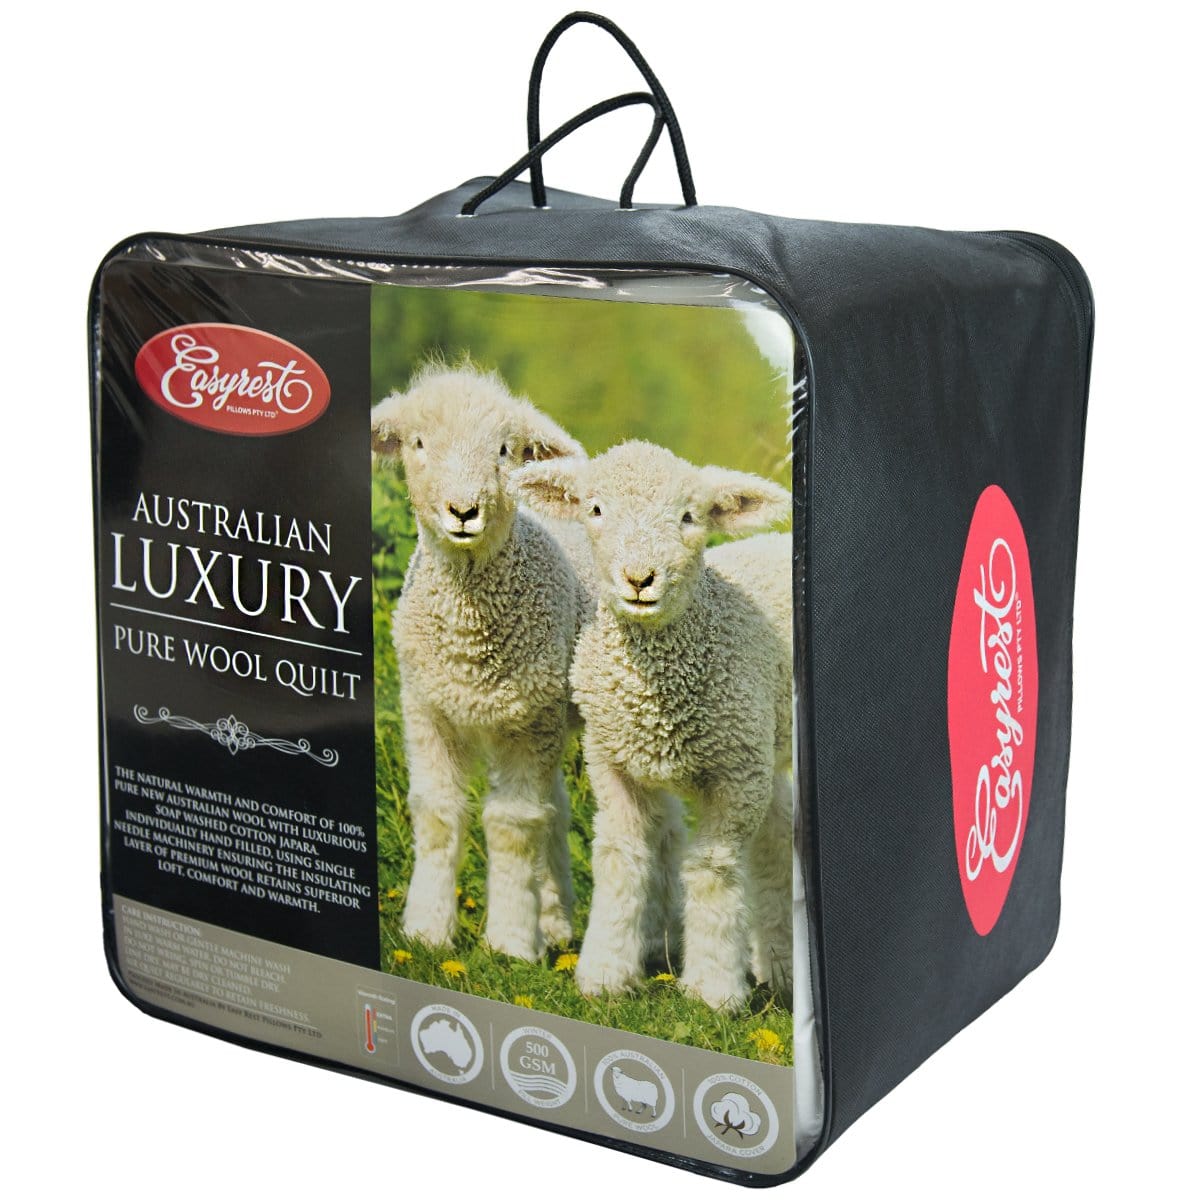 Easy Rest Australian Luxury 100% Pure Wool Quilt 500GSM - Queen - Brilliant Co